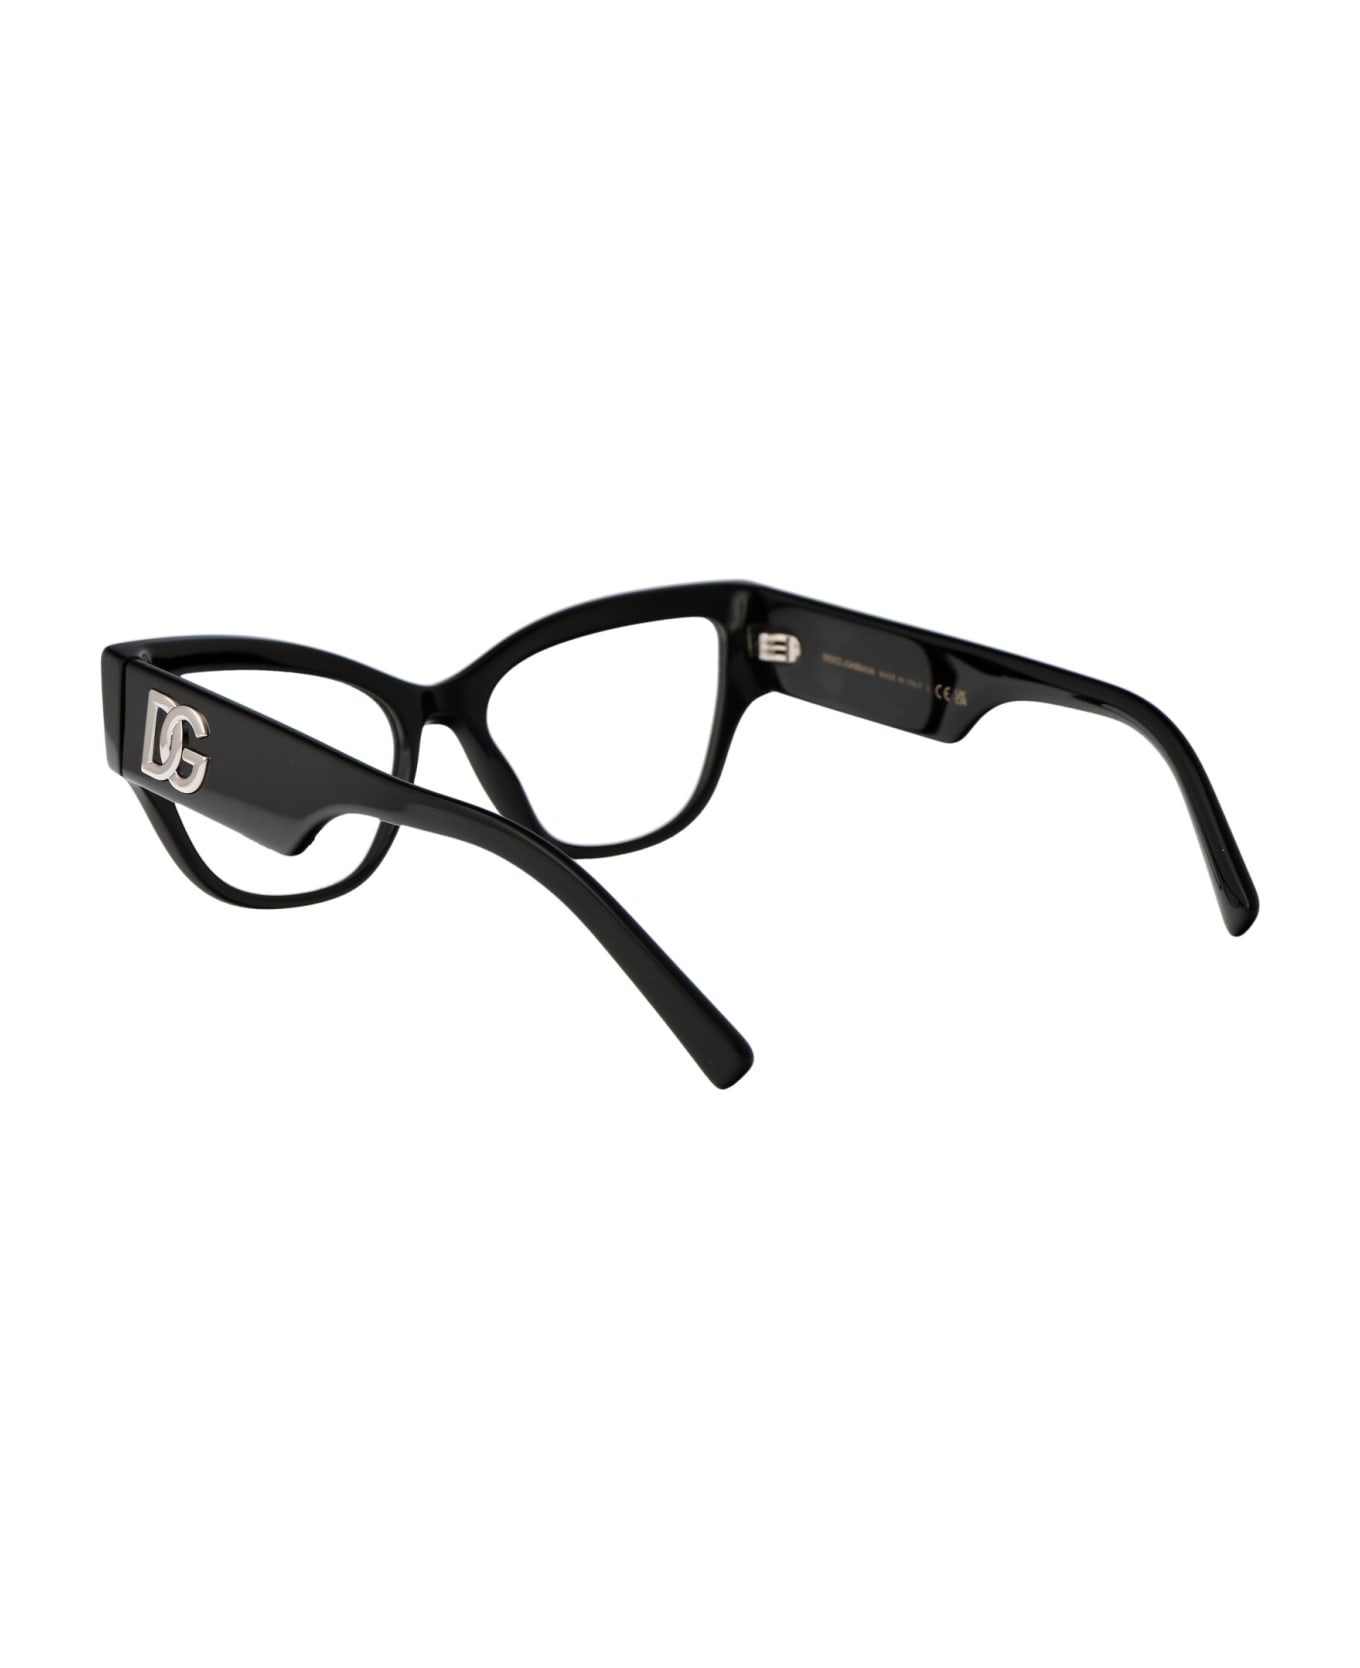 Dolce & Gabbana Eyewear 0dg3378 Glasses - 501 BLACK アイウェア